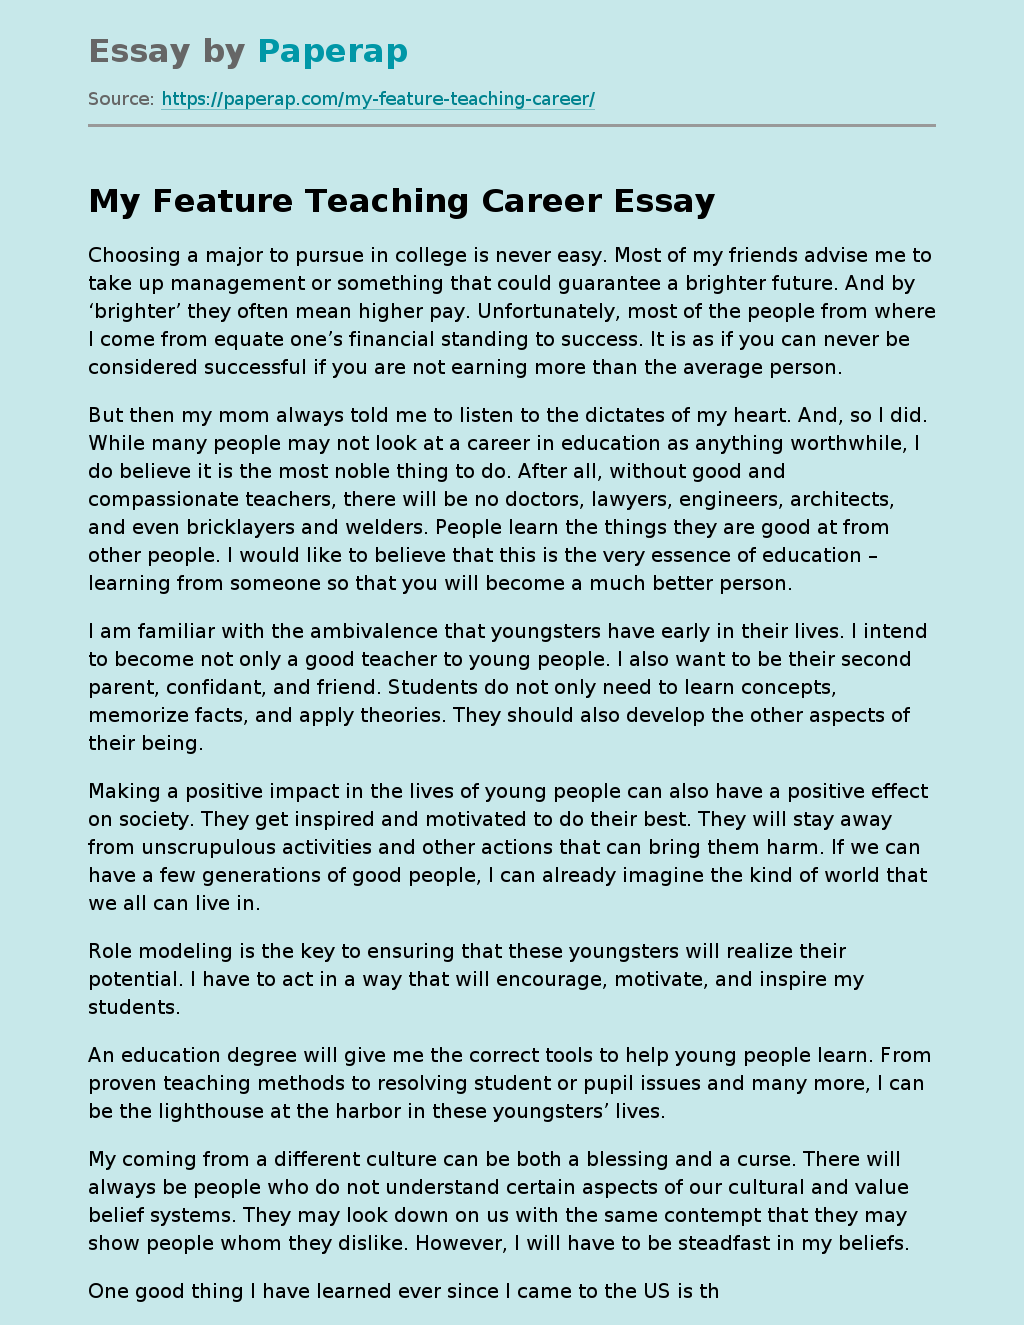 My Feature Teaching Career